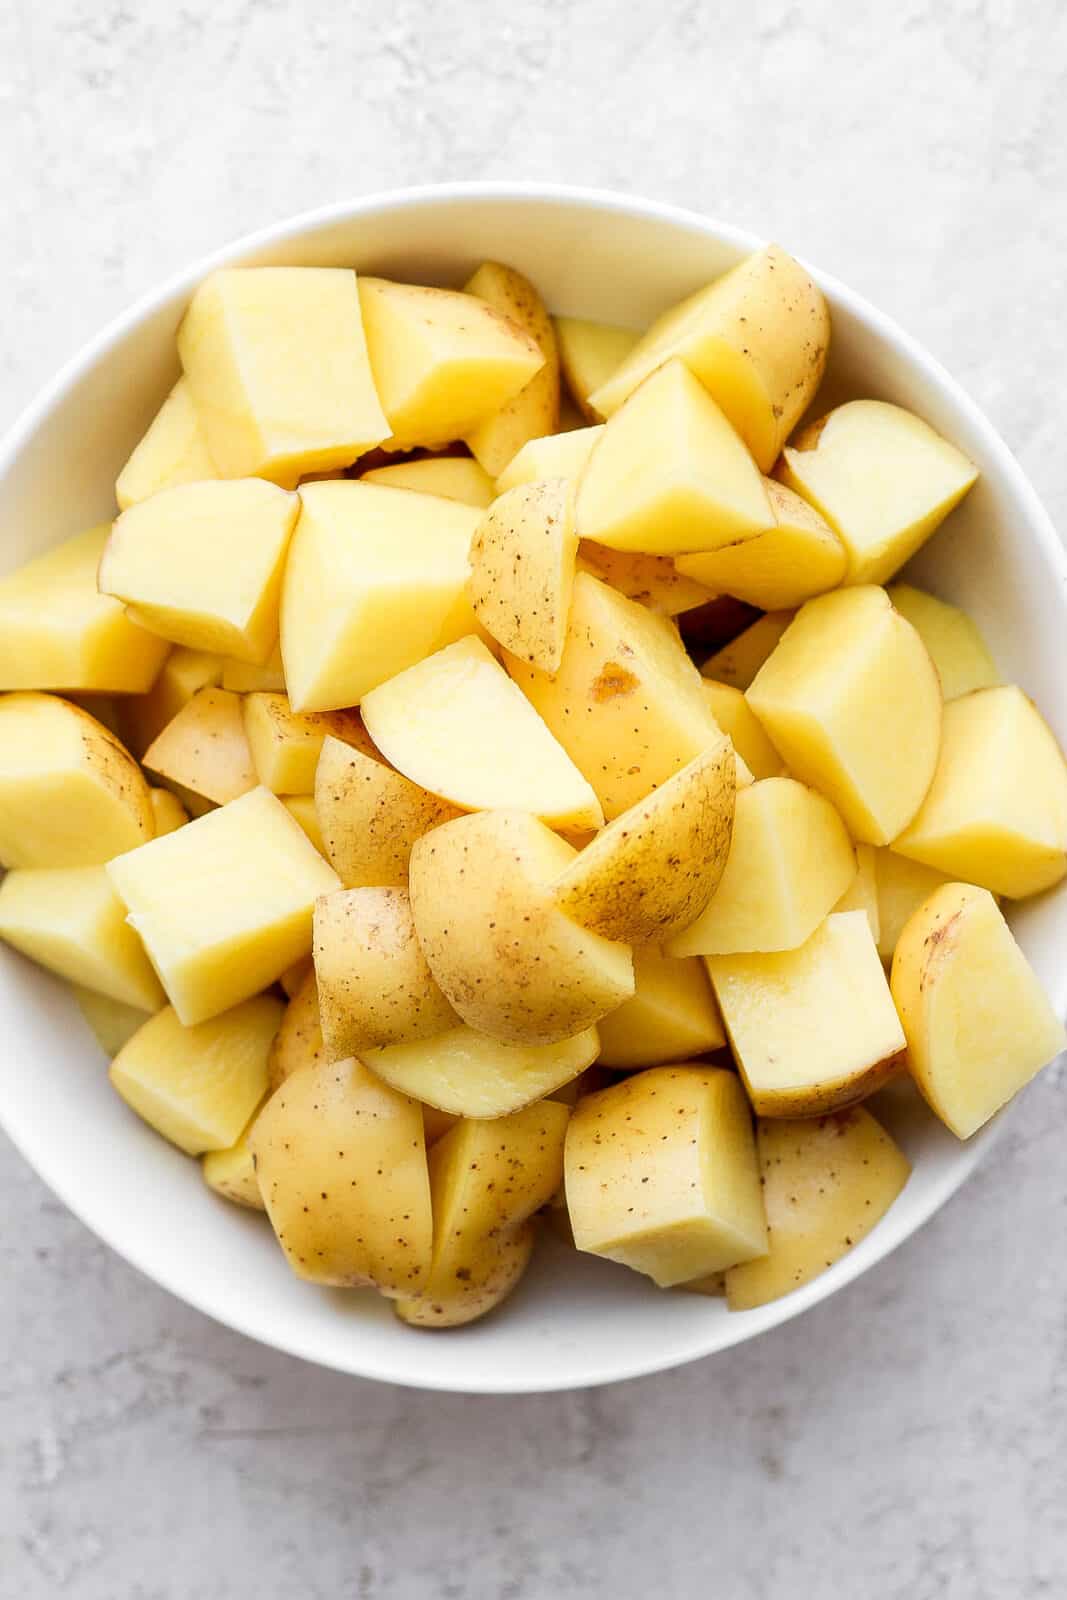 Yukon gold potatoes cut into large cubes.